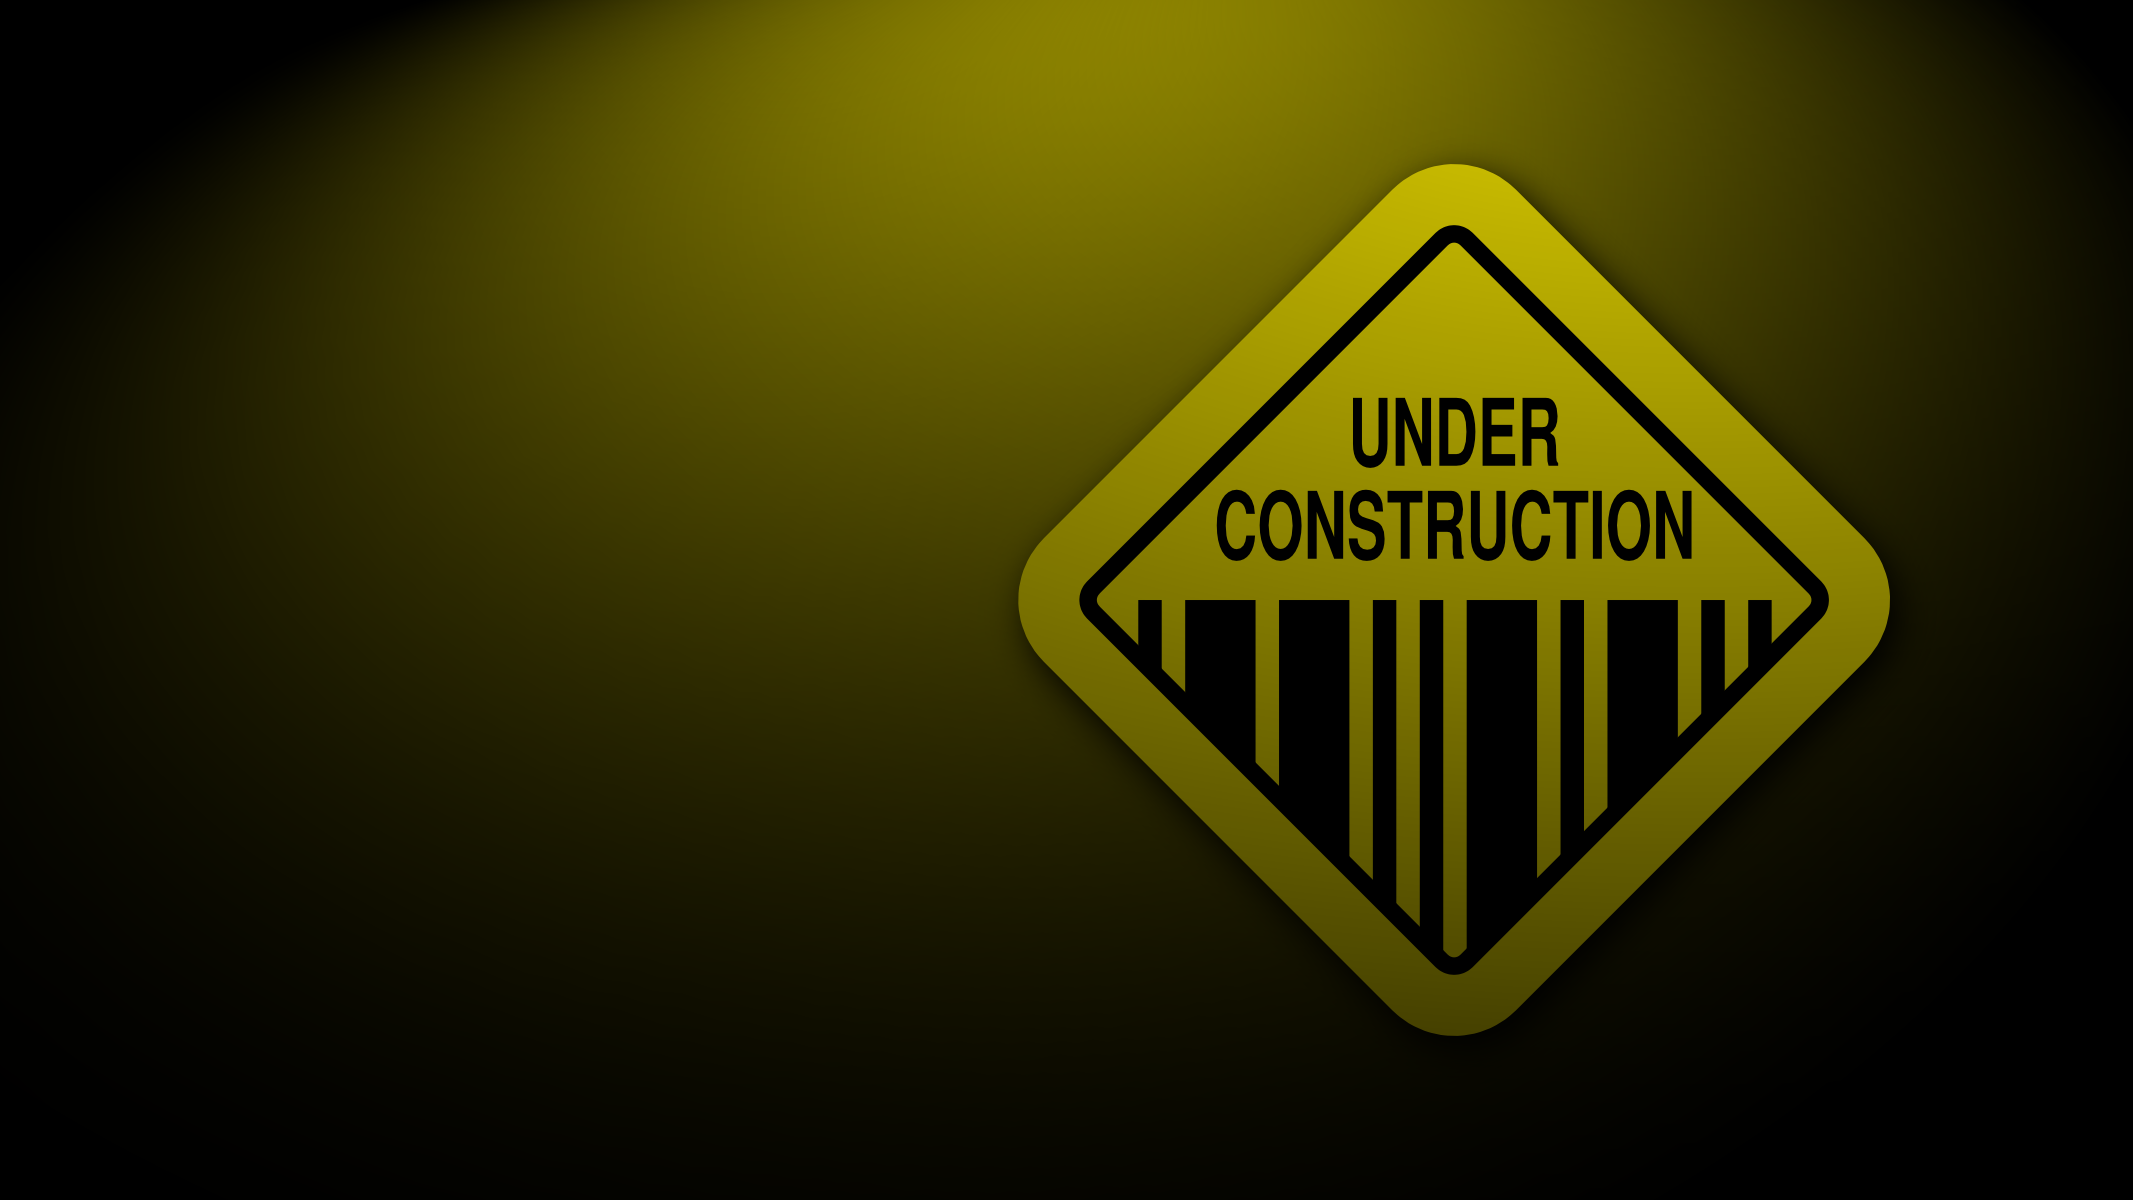 File Wikidata Logo Under Construction Sign Wallpaper Png